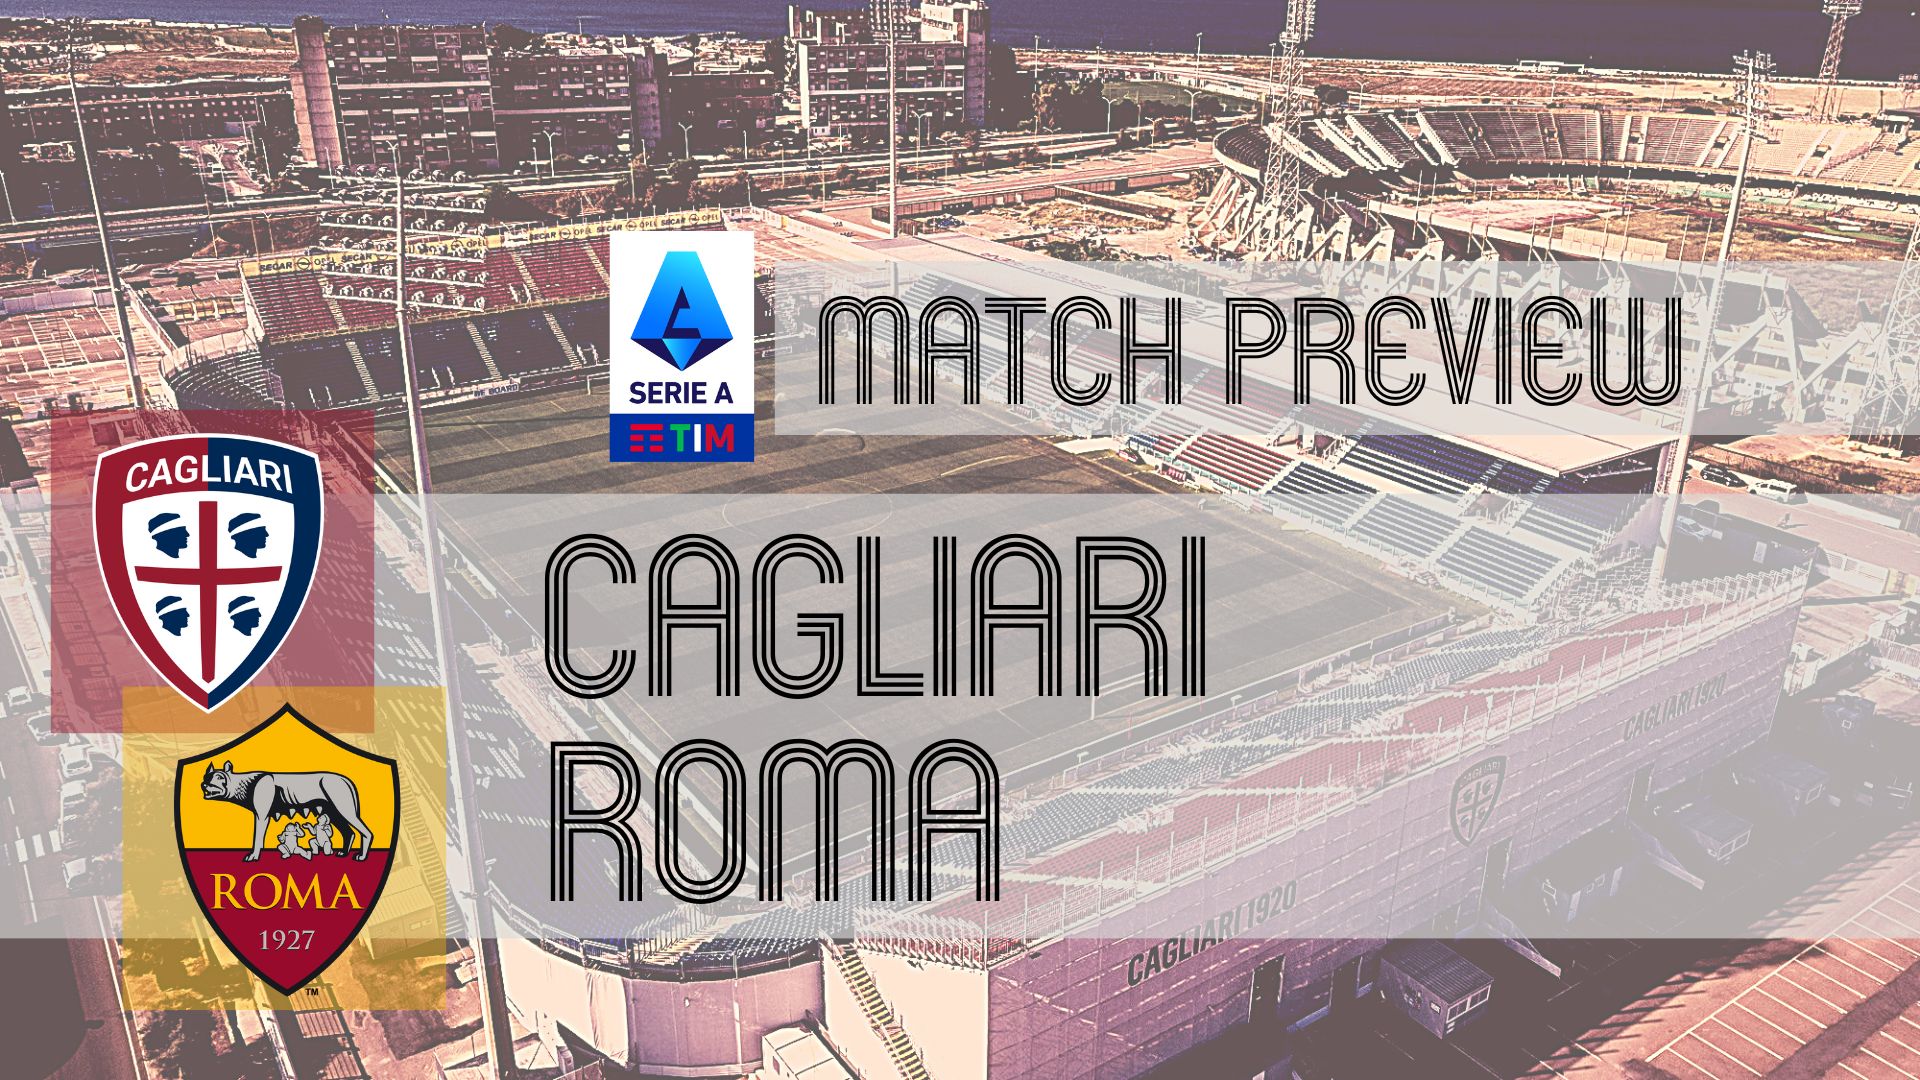 Genoa vs Roma live score, H2H and lineups